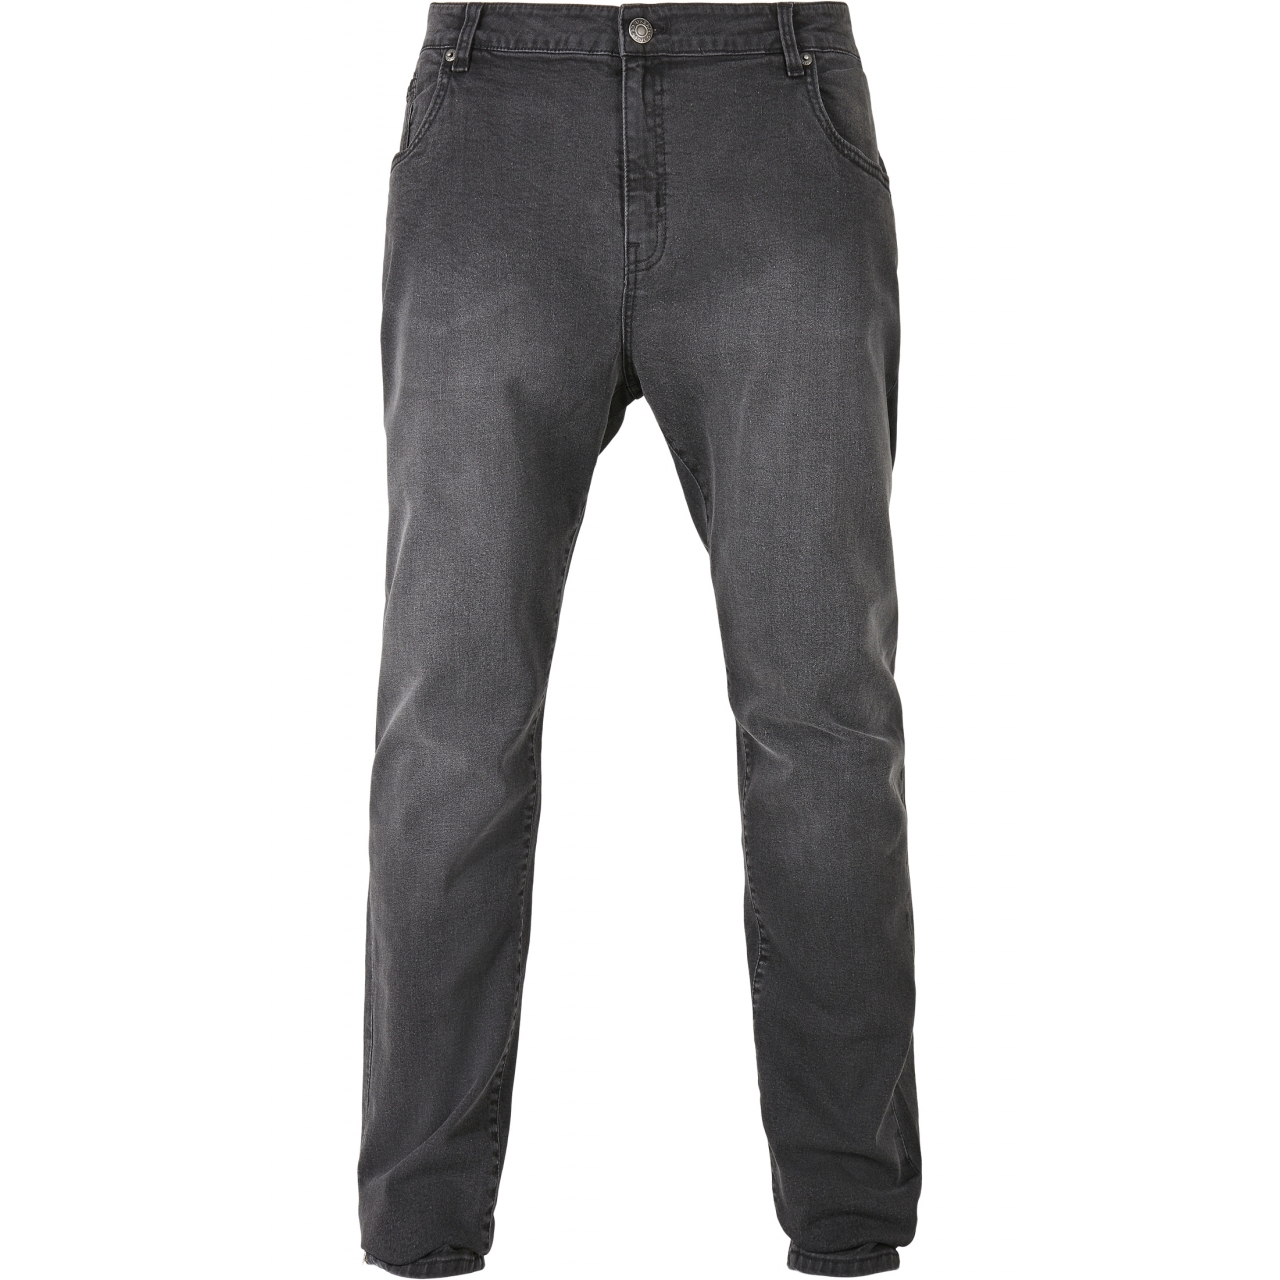 Džíny Urban Classics Slim Fit Zip Jeans - černé, 31/34